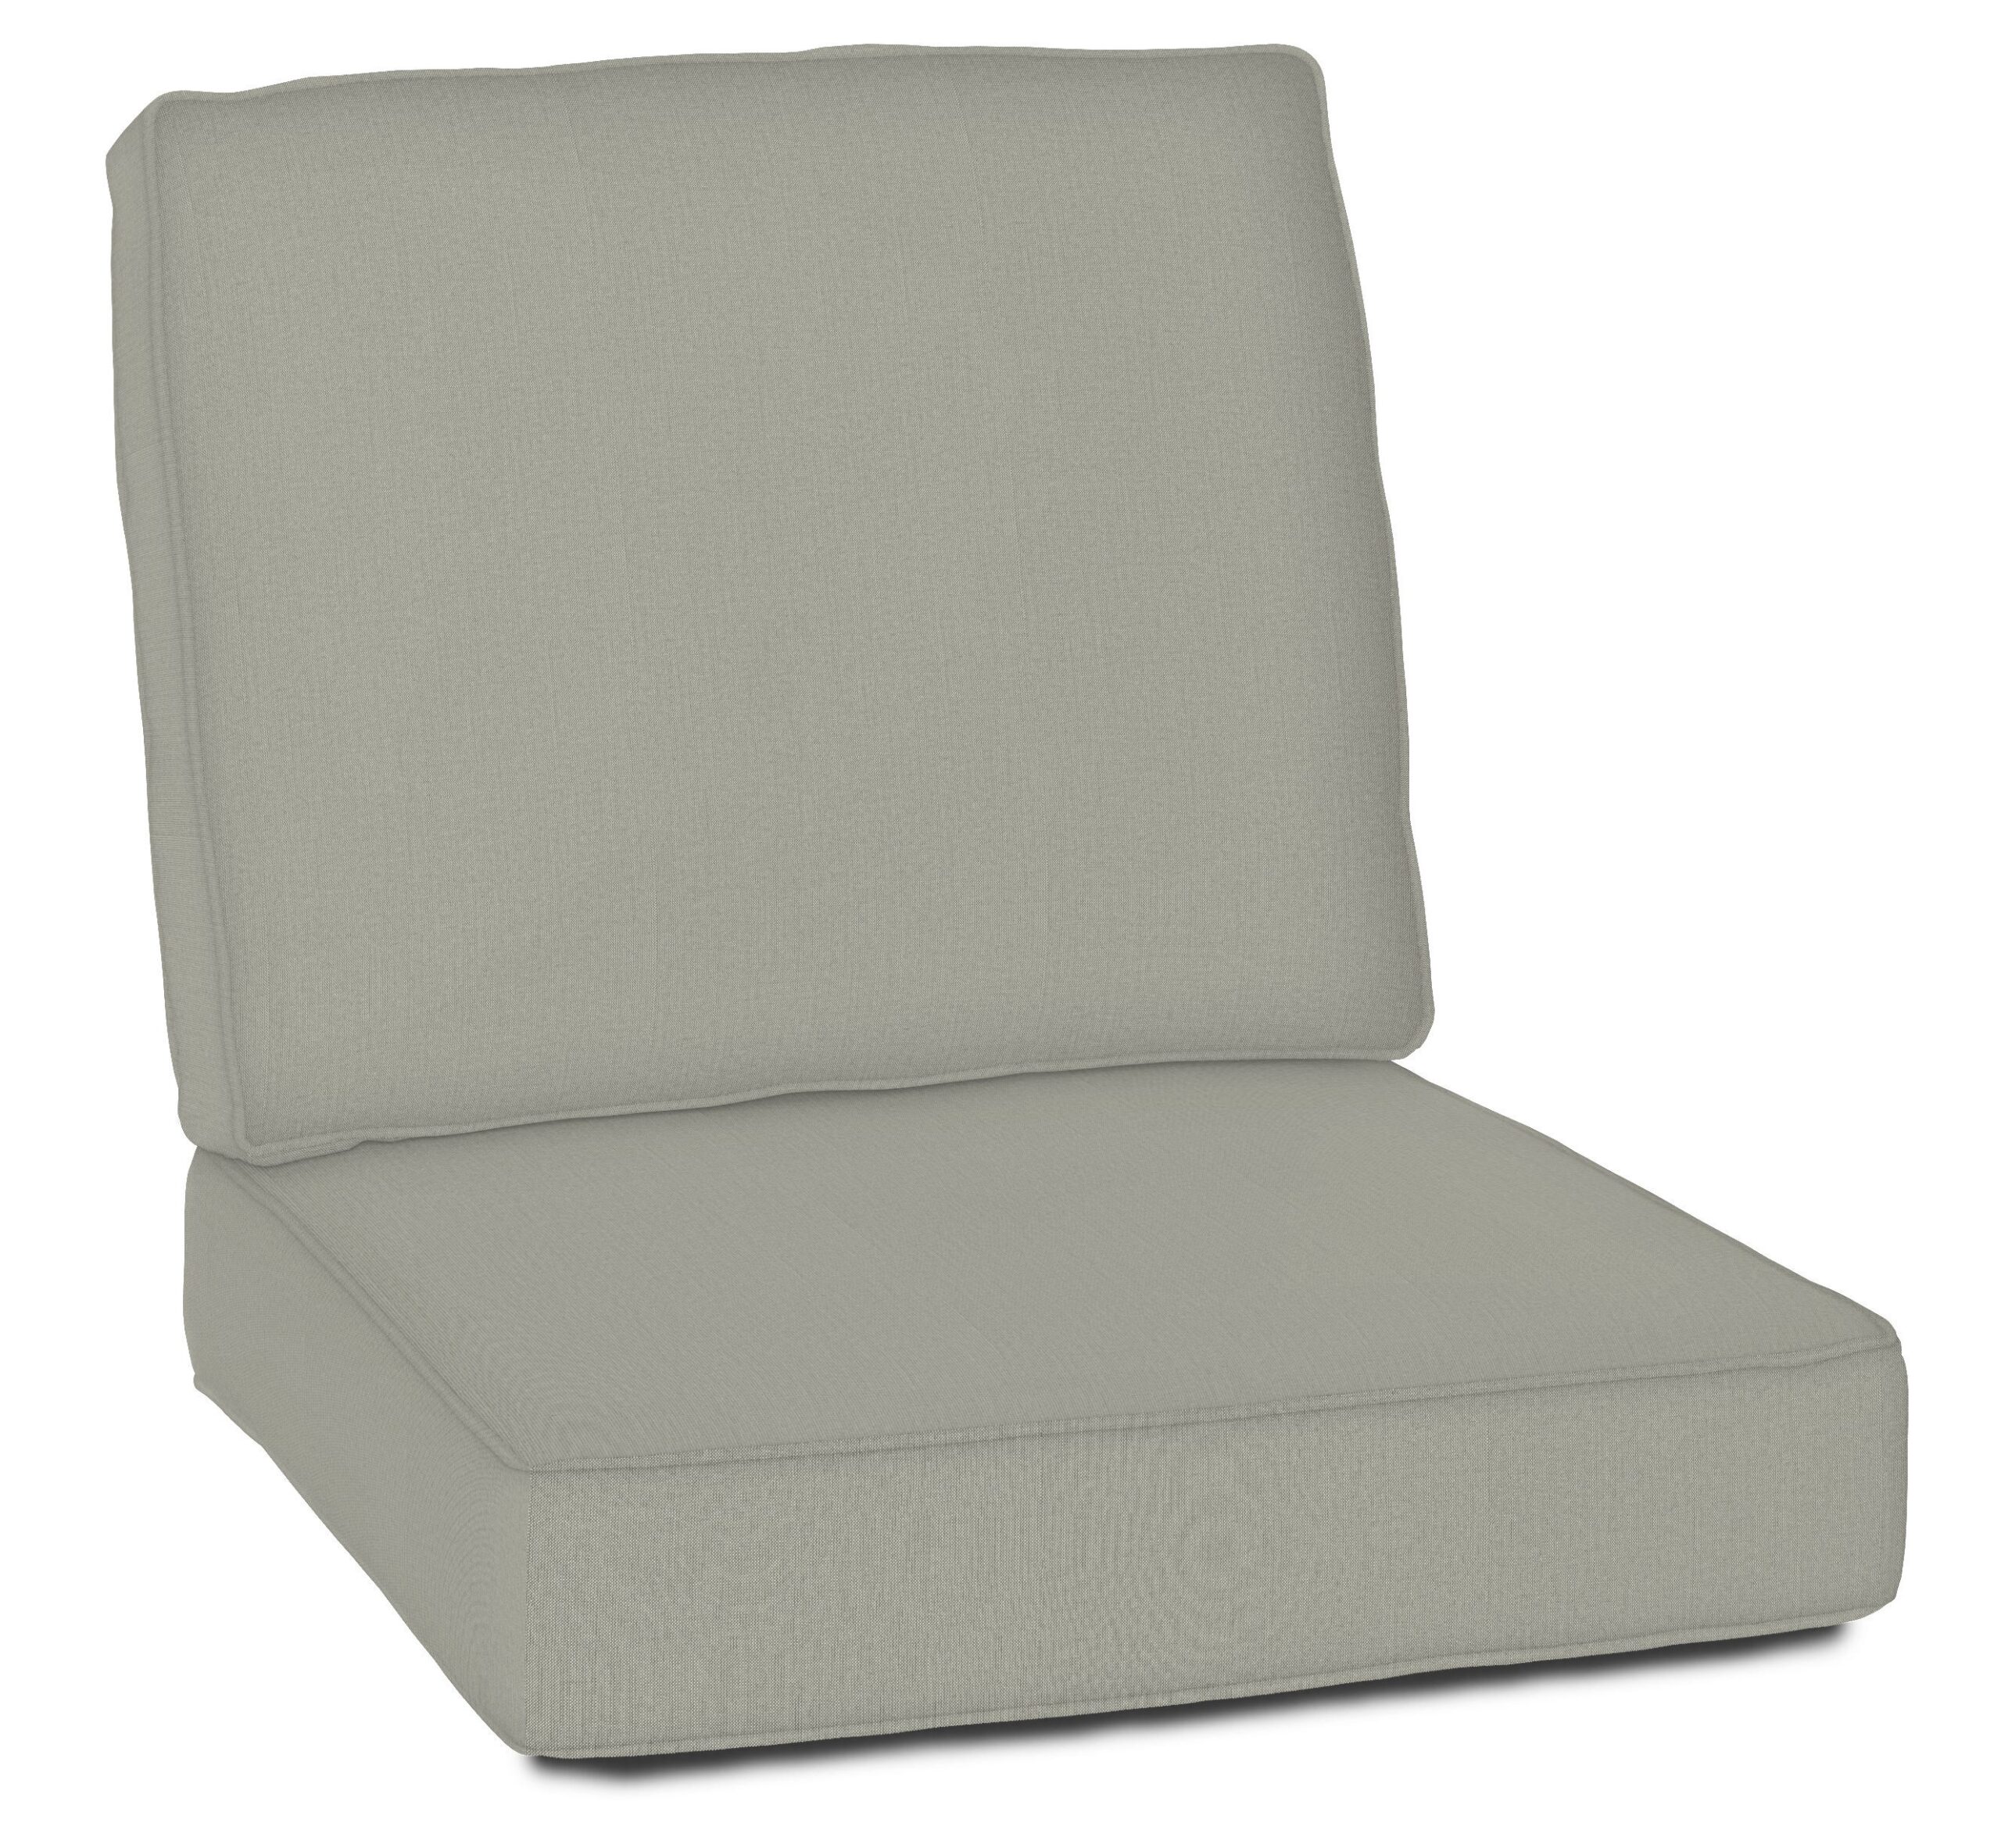 Kingsley Bate Chelsea Deep Seating Cushion Spectrum Dove Clearance